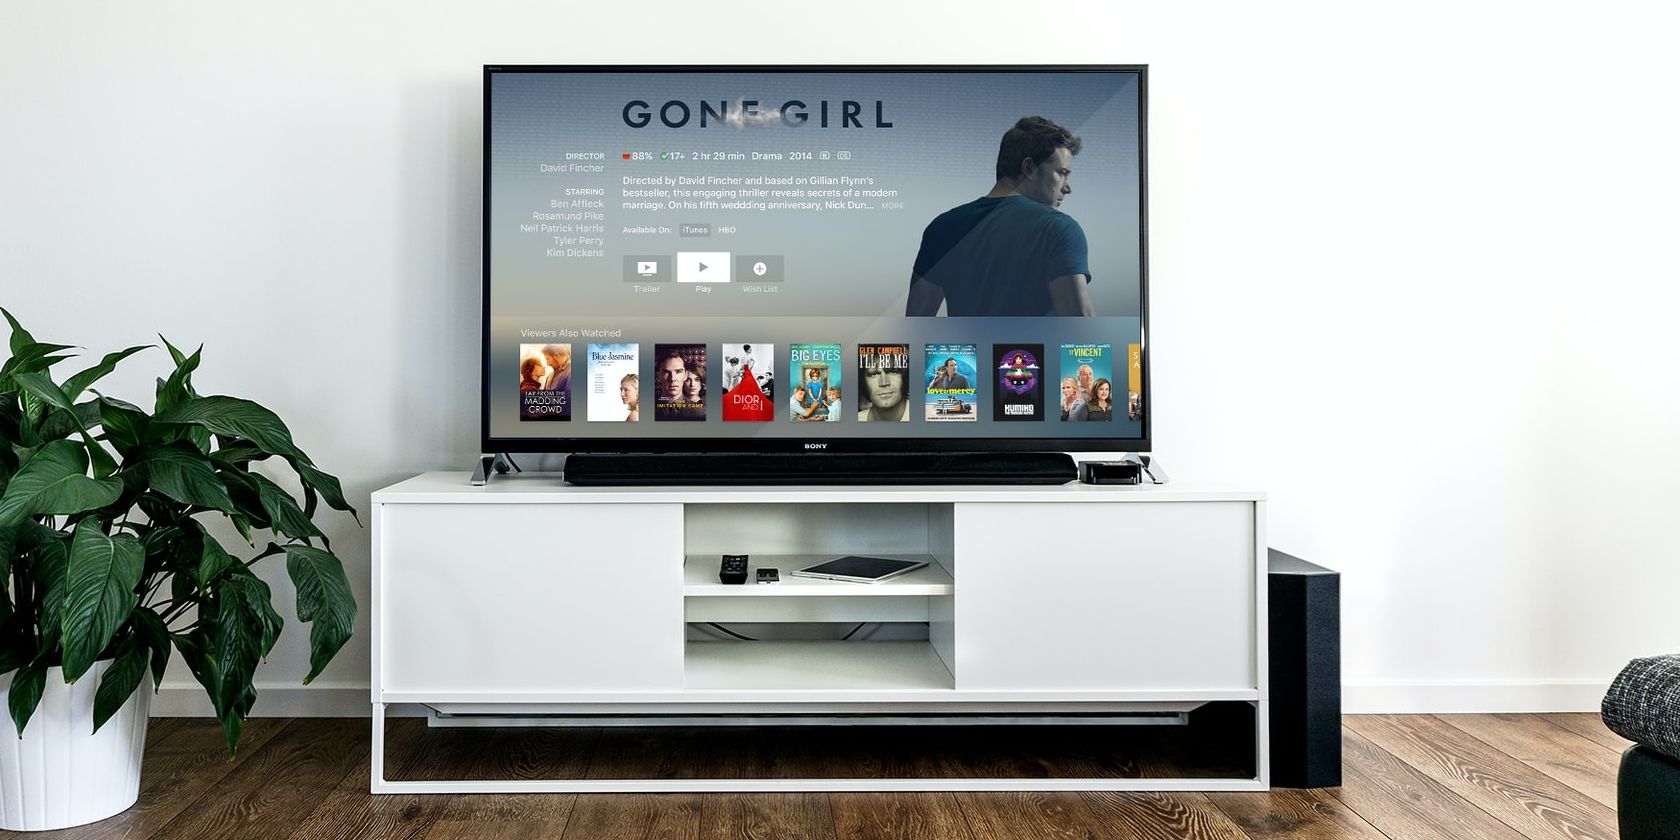 Netflix on TV in Living Room